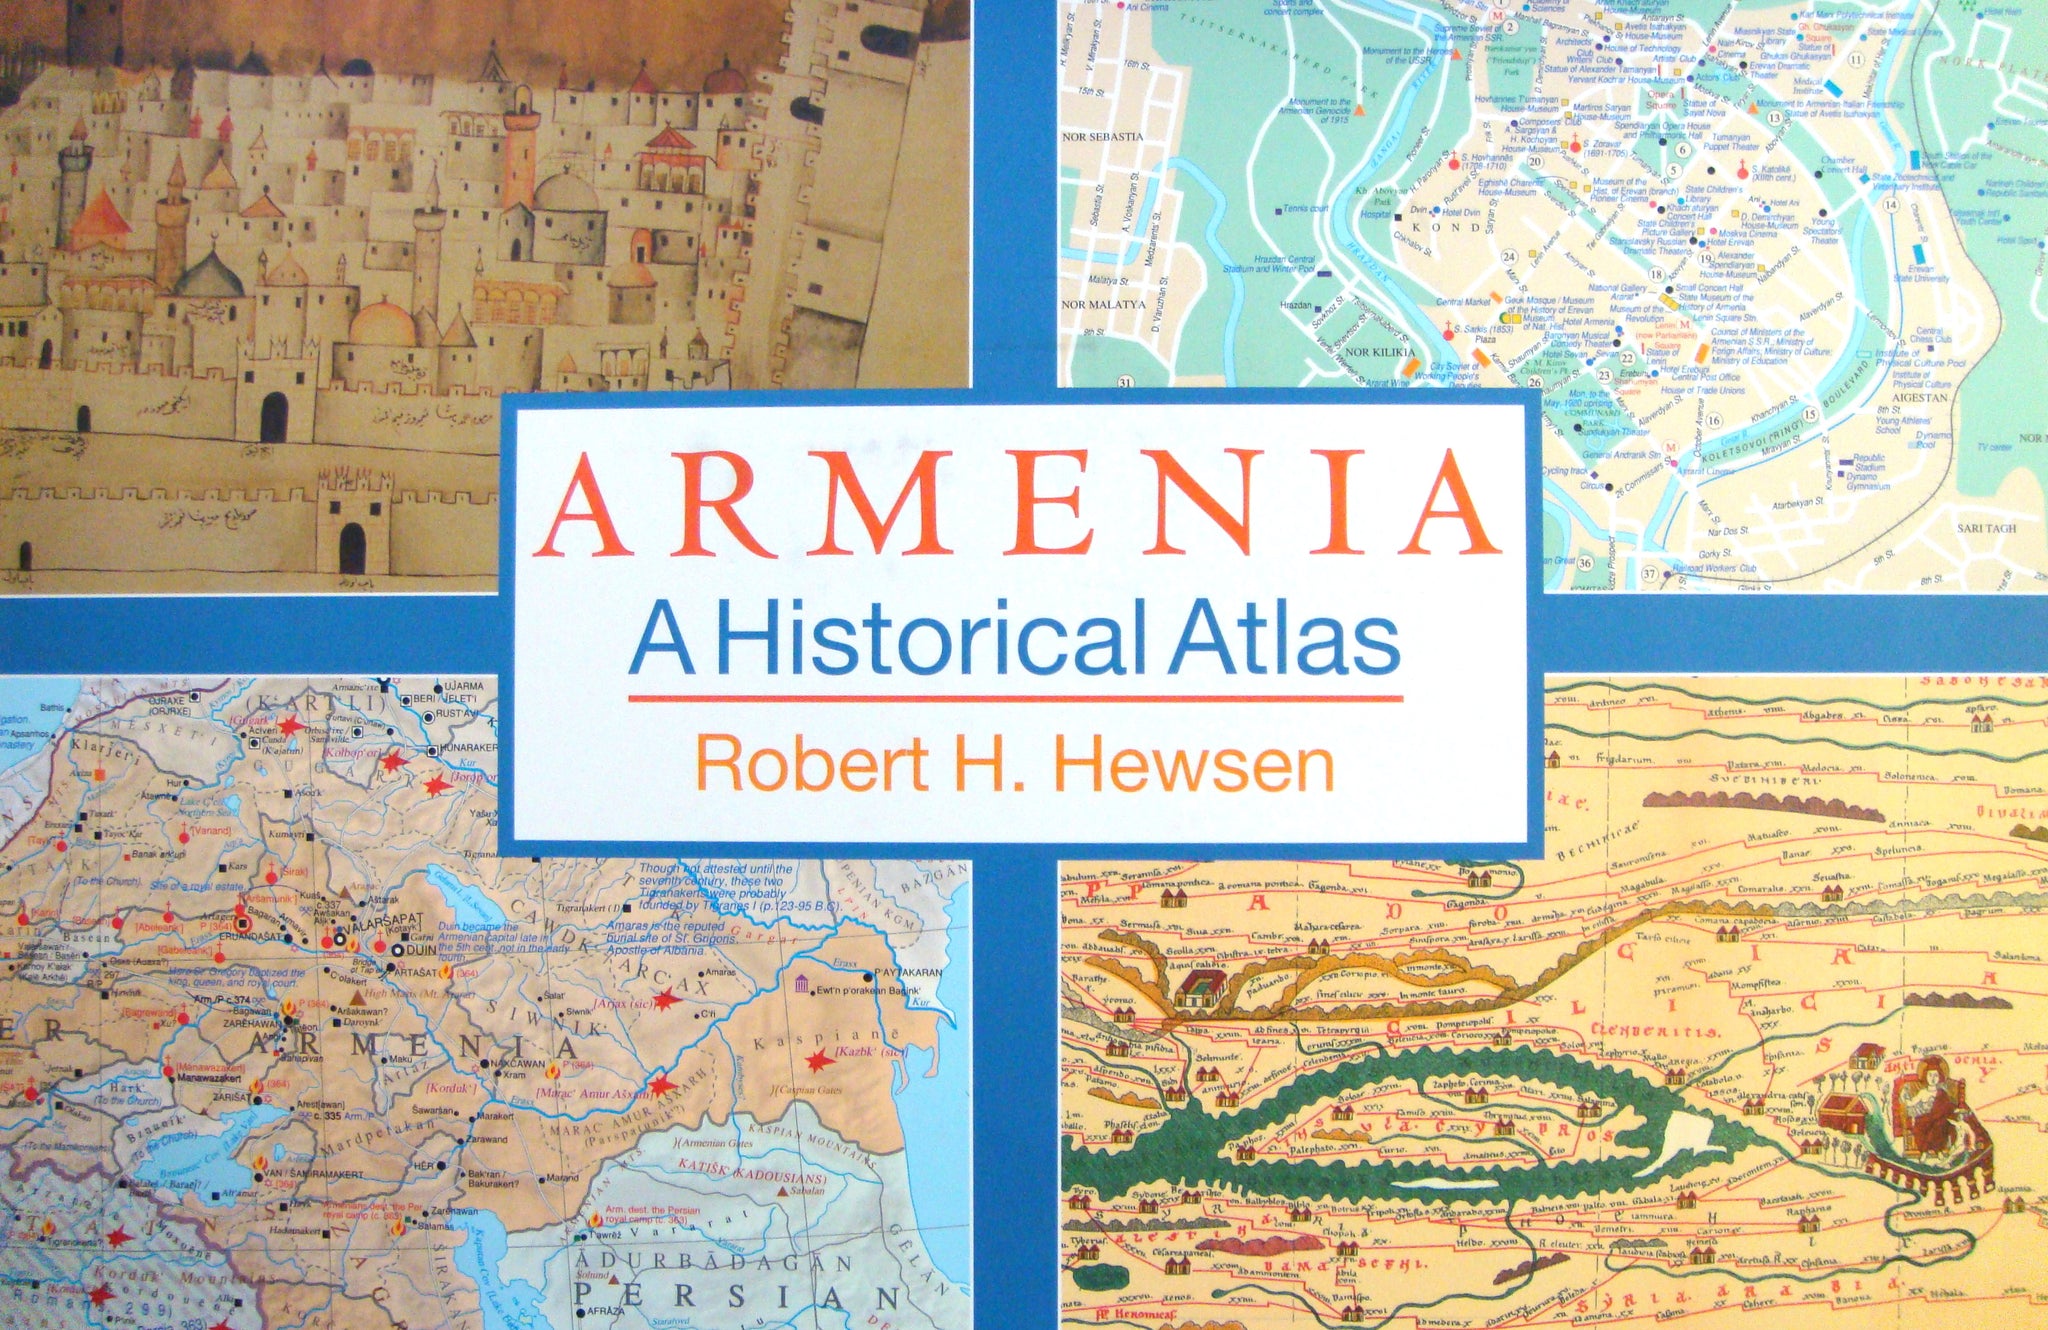 ARMENIA: A HISTORICAL ATLAS